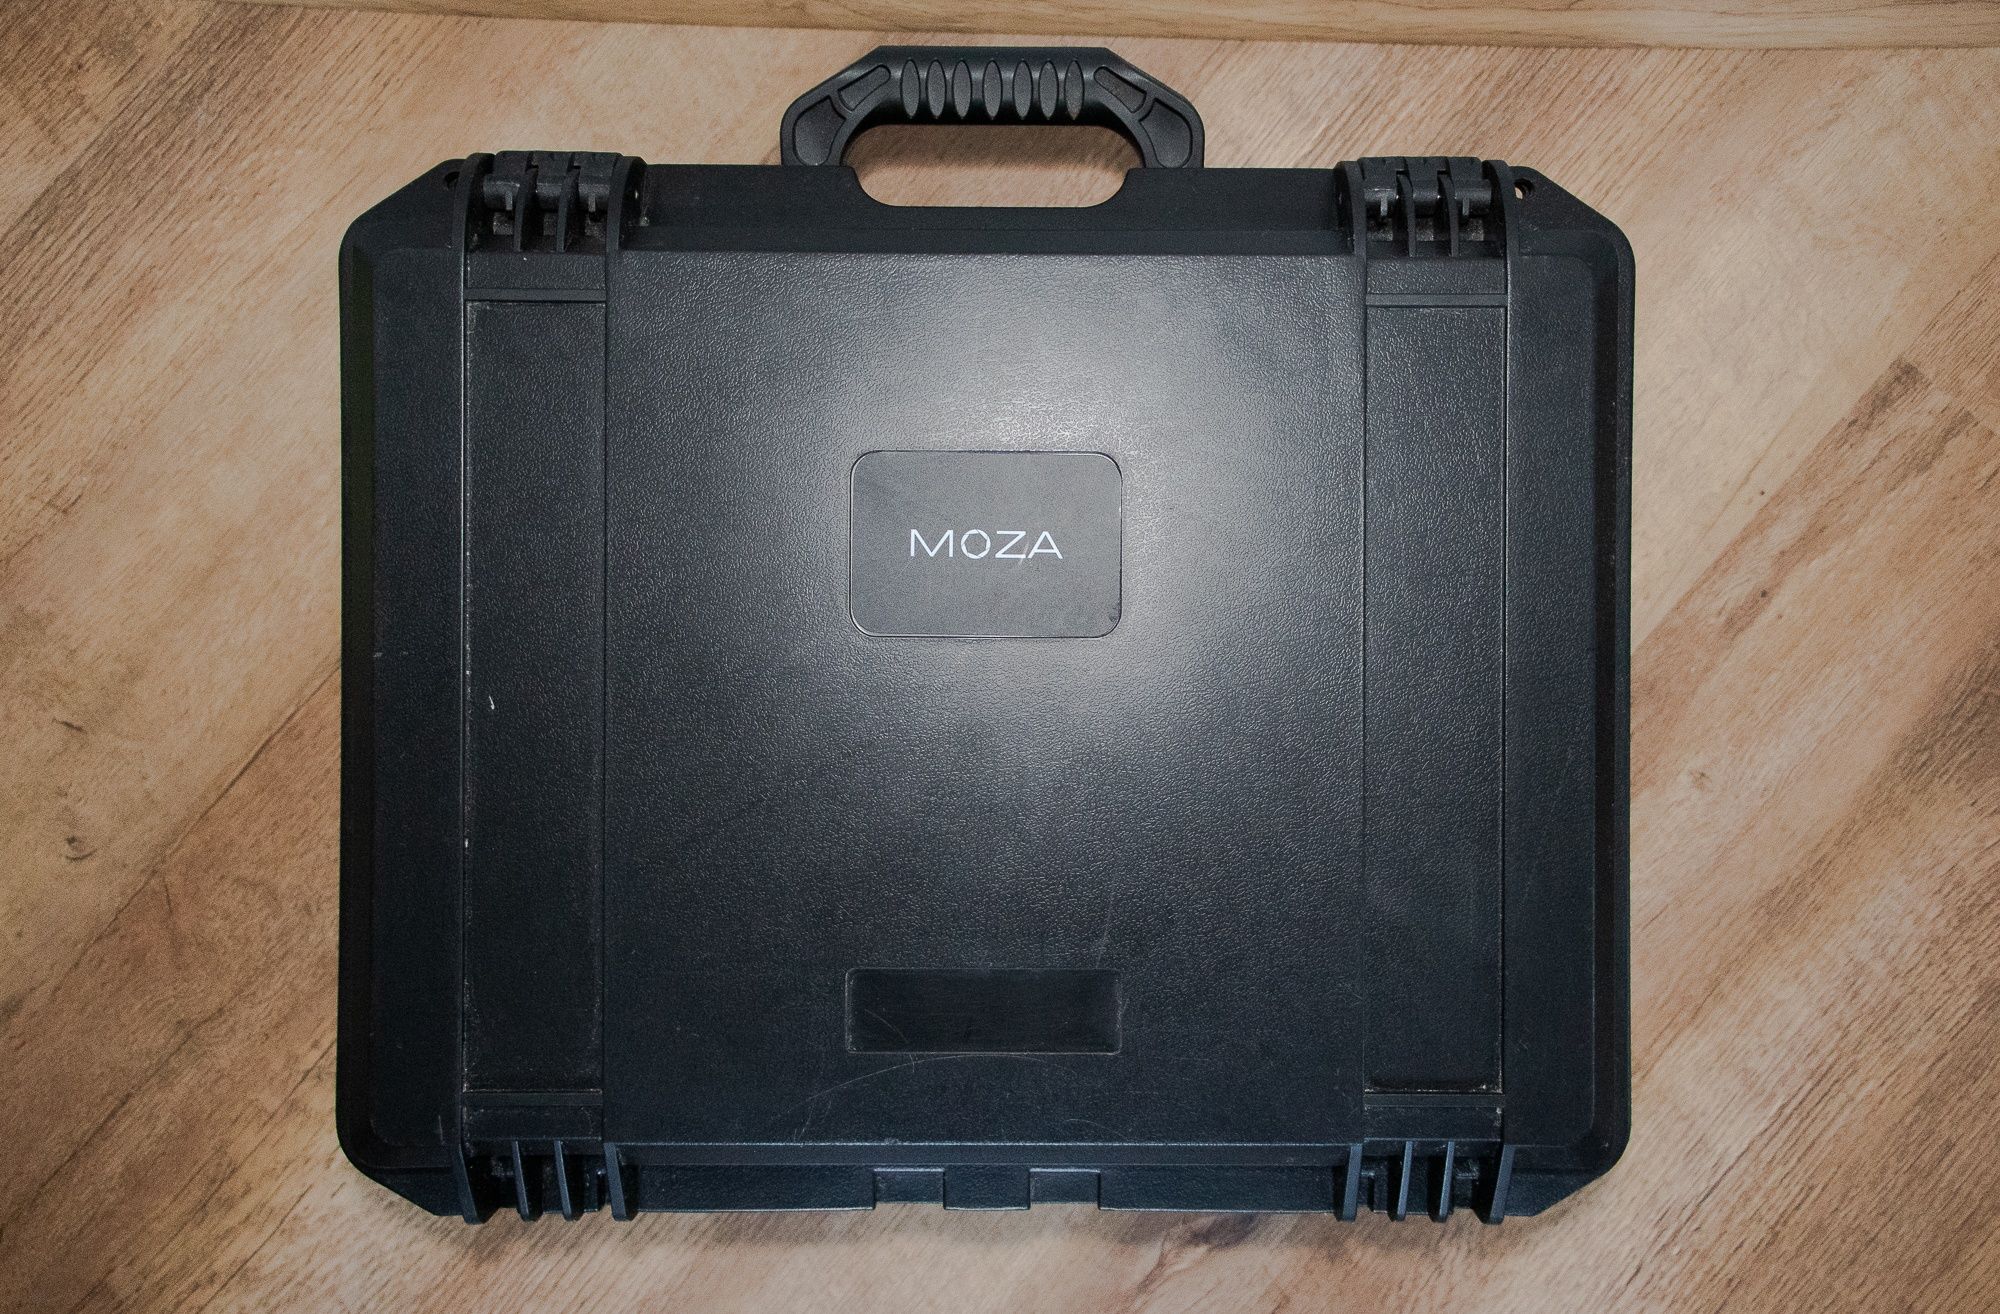 Стабилизаторы Moza Air, DJI Osmo Mobile 2
Стабилизаторы Вес: 485 г
Мож